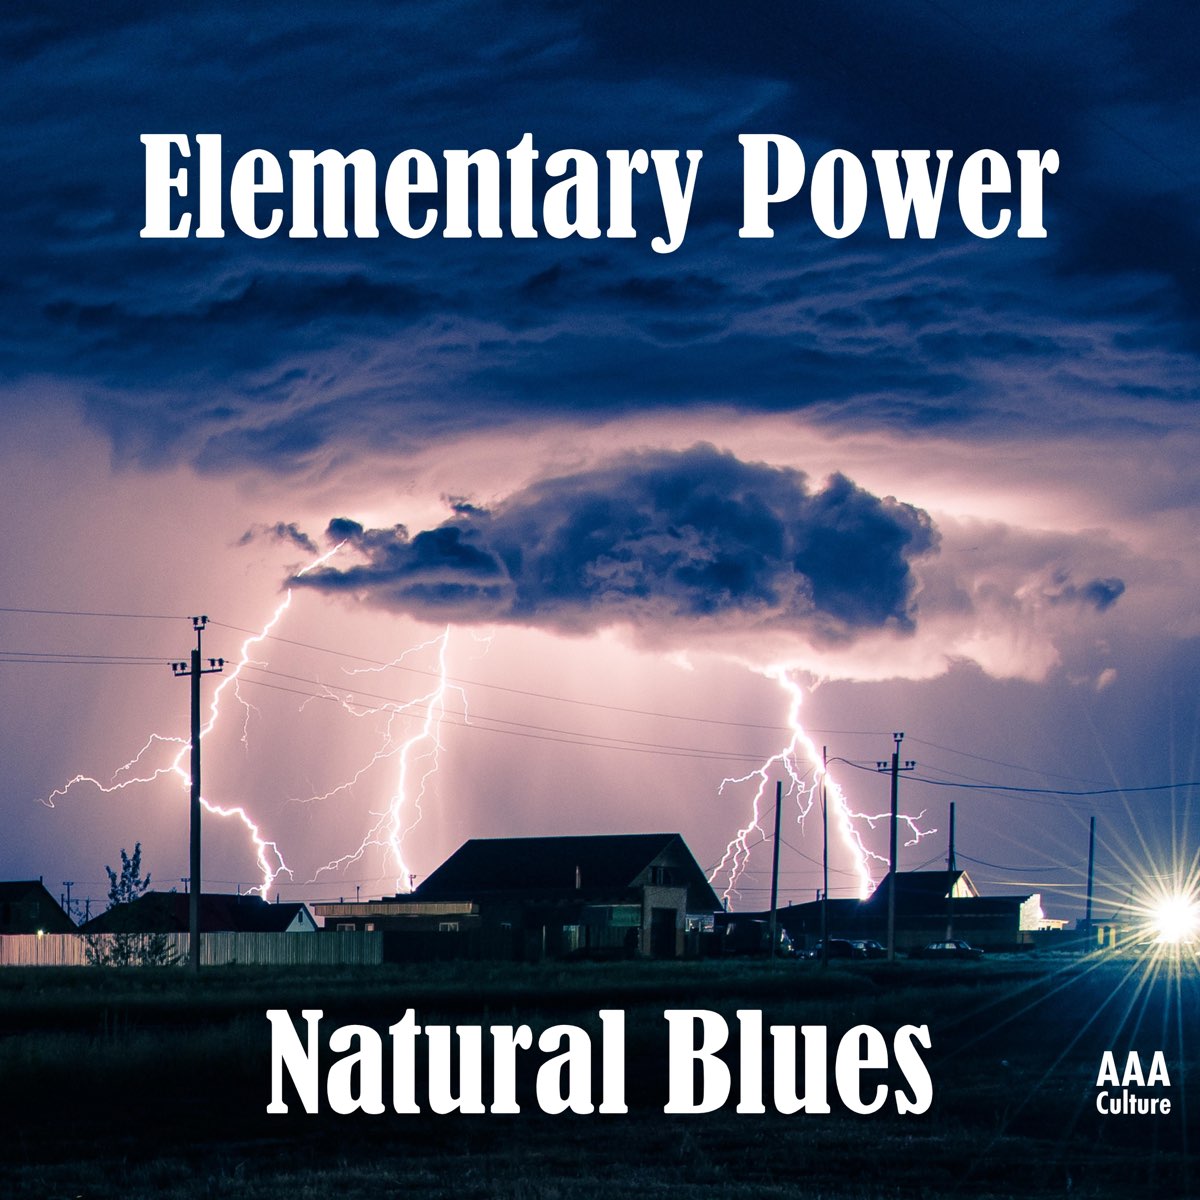 Natural Blues. Natural element Powers. Elements Power. Morning Blues - morning Blues (2021). Element blues